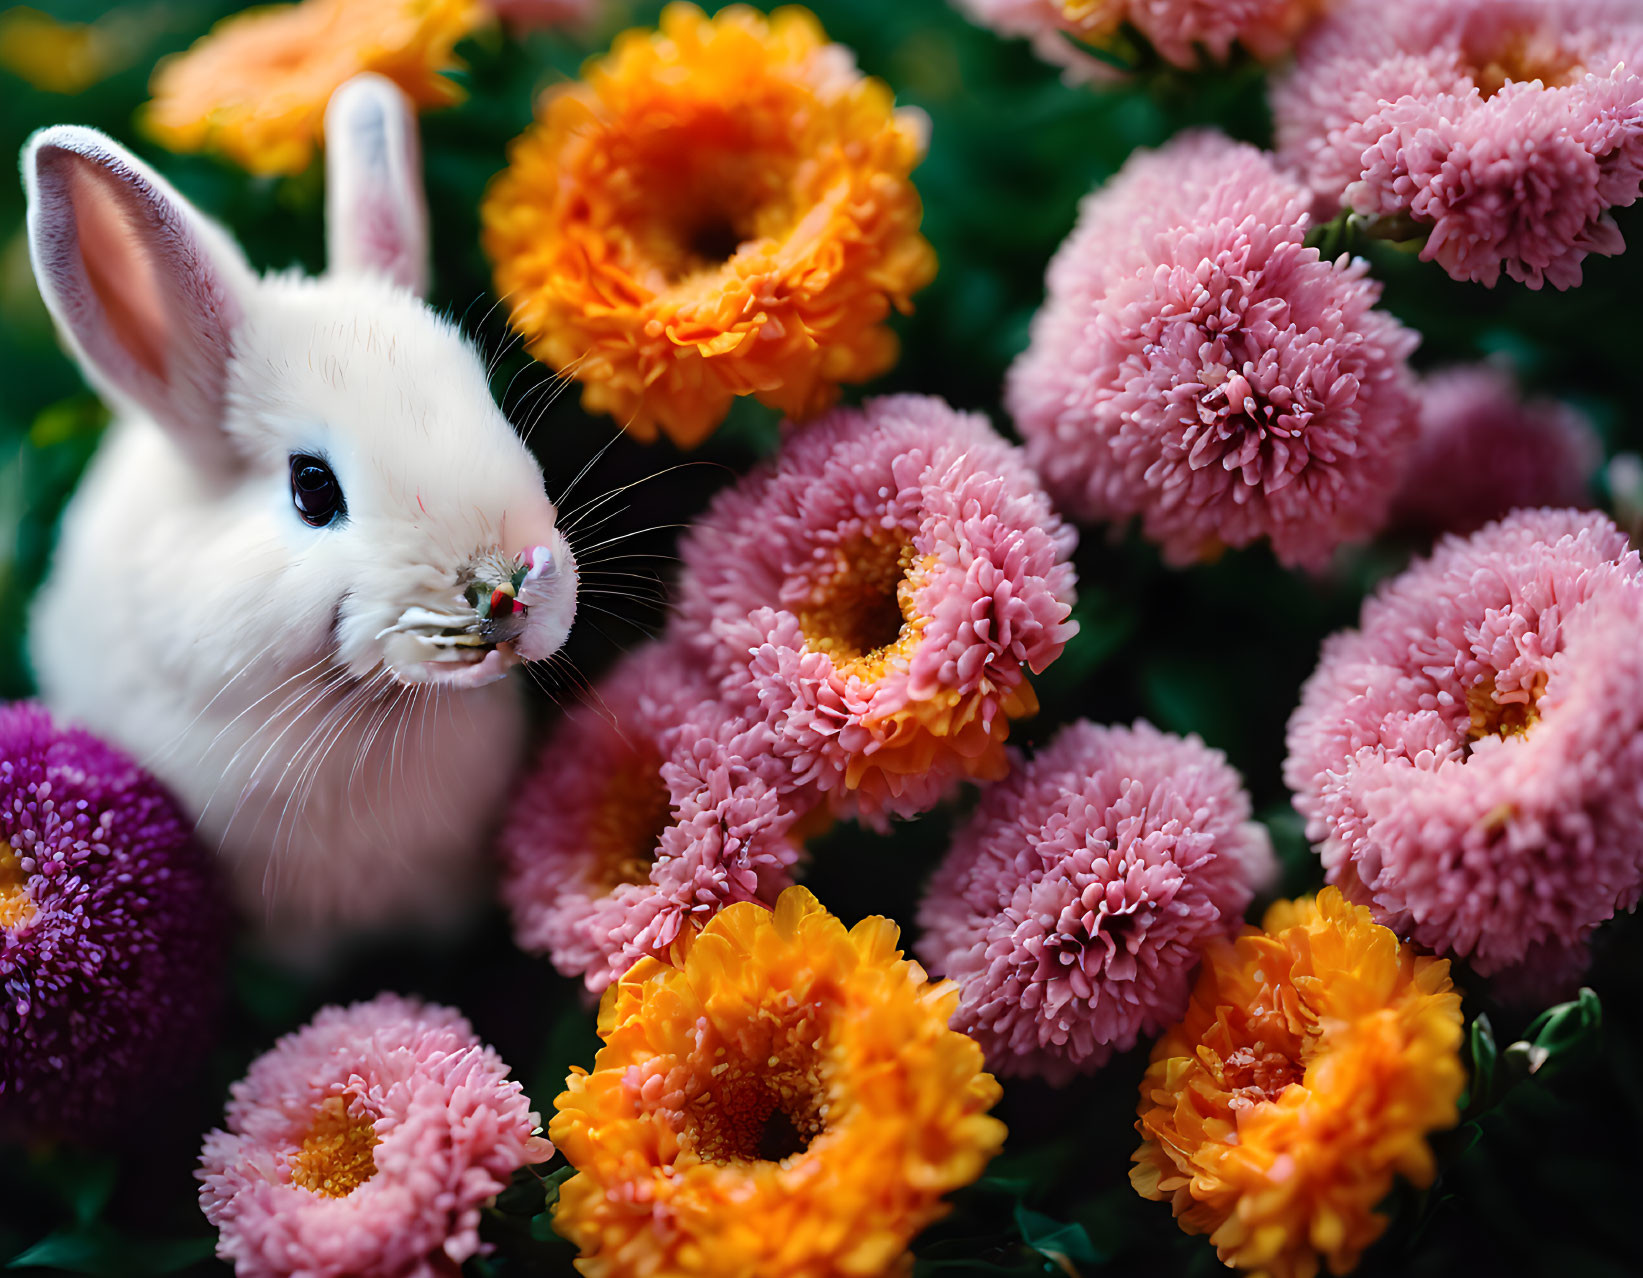 White Rabbit Among Colorful Chrysanthemum Flowers